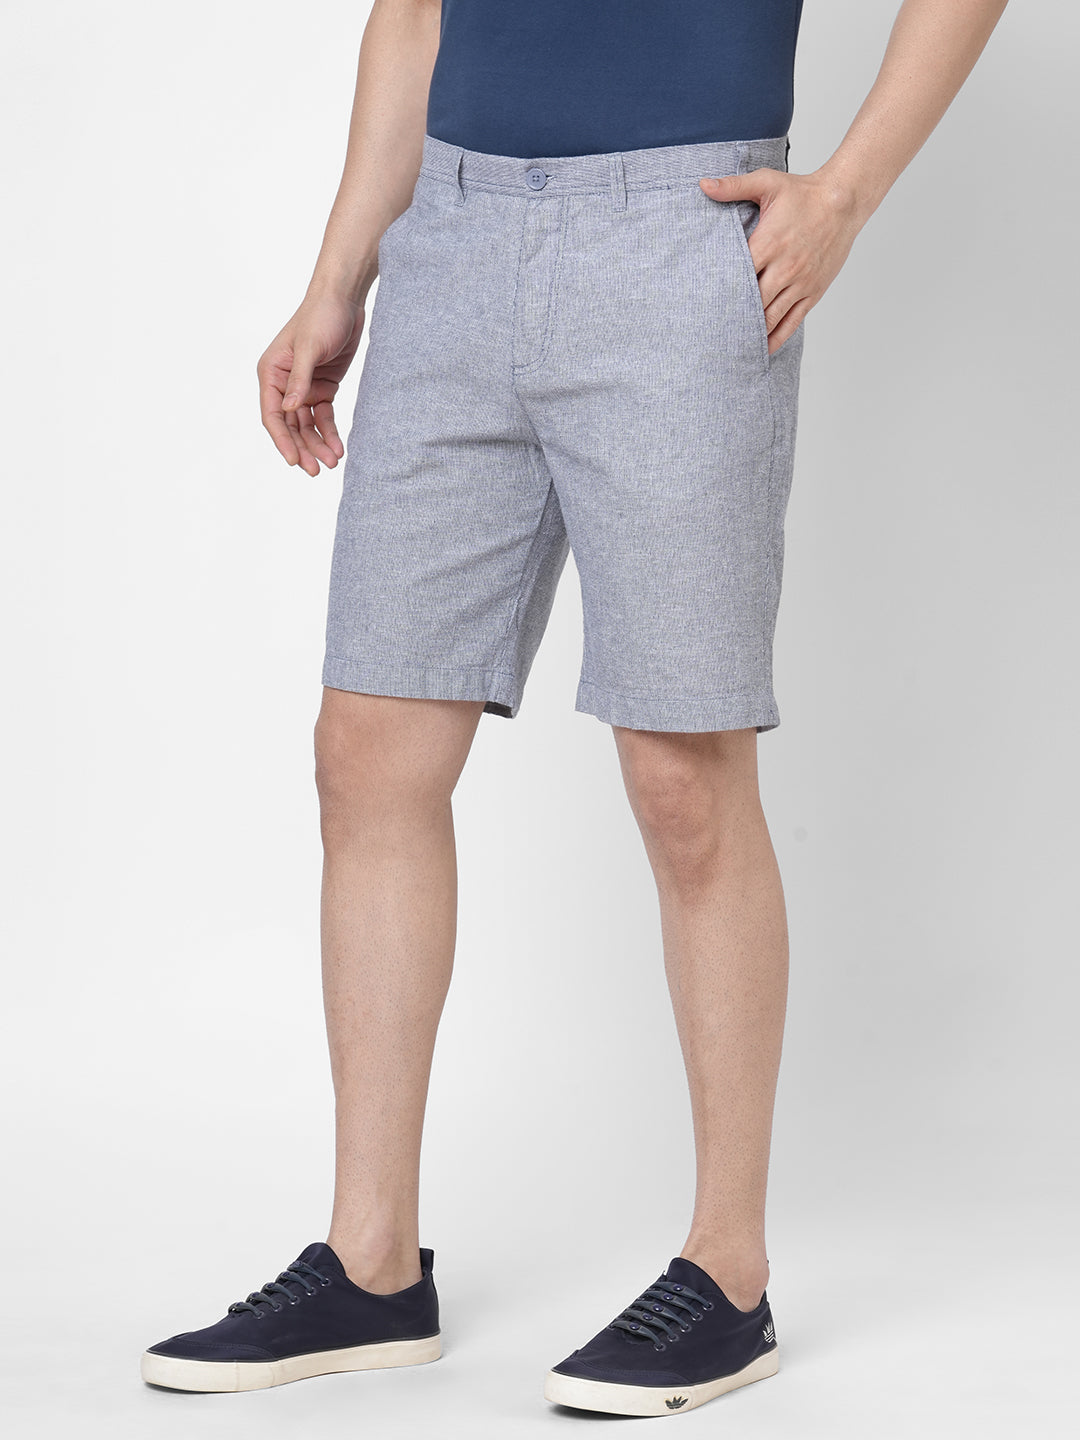 Men's Navy Cotton Linen Regular Fit Shorts